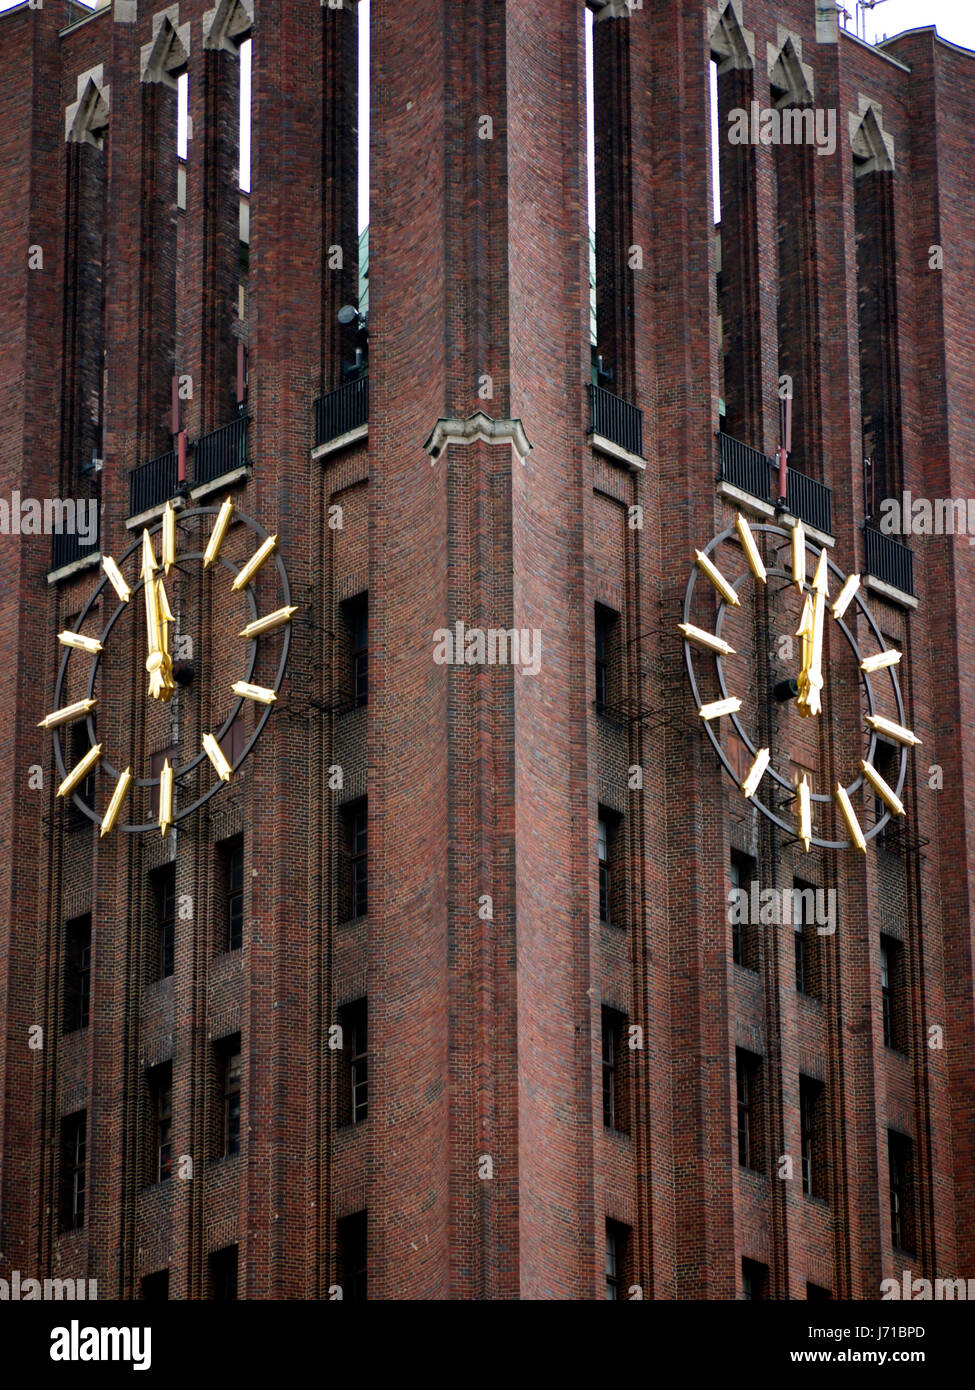 tower berlin germany german federal republic city view clock clock tower Stock Photo